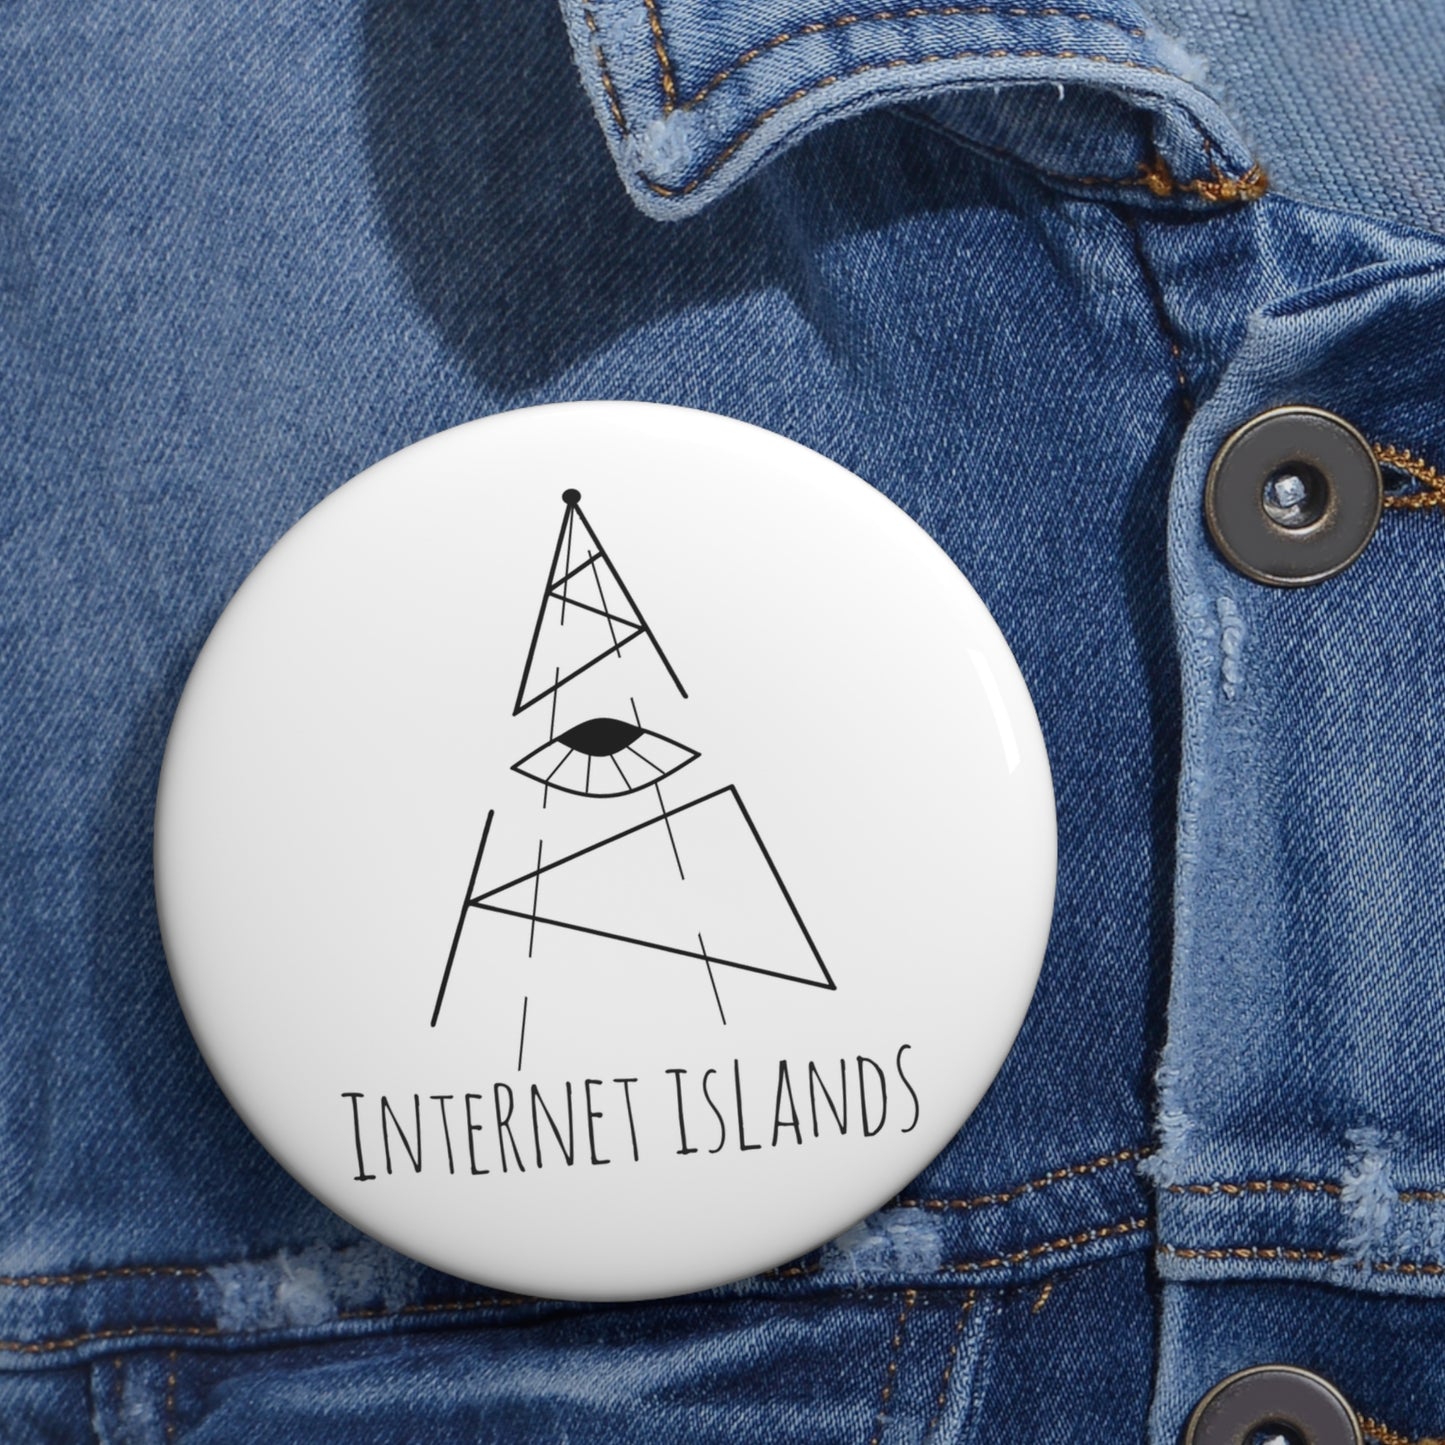 Internet Islands Pin - Button (WHITE)